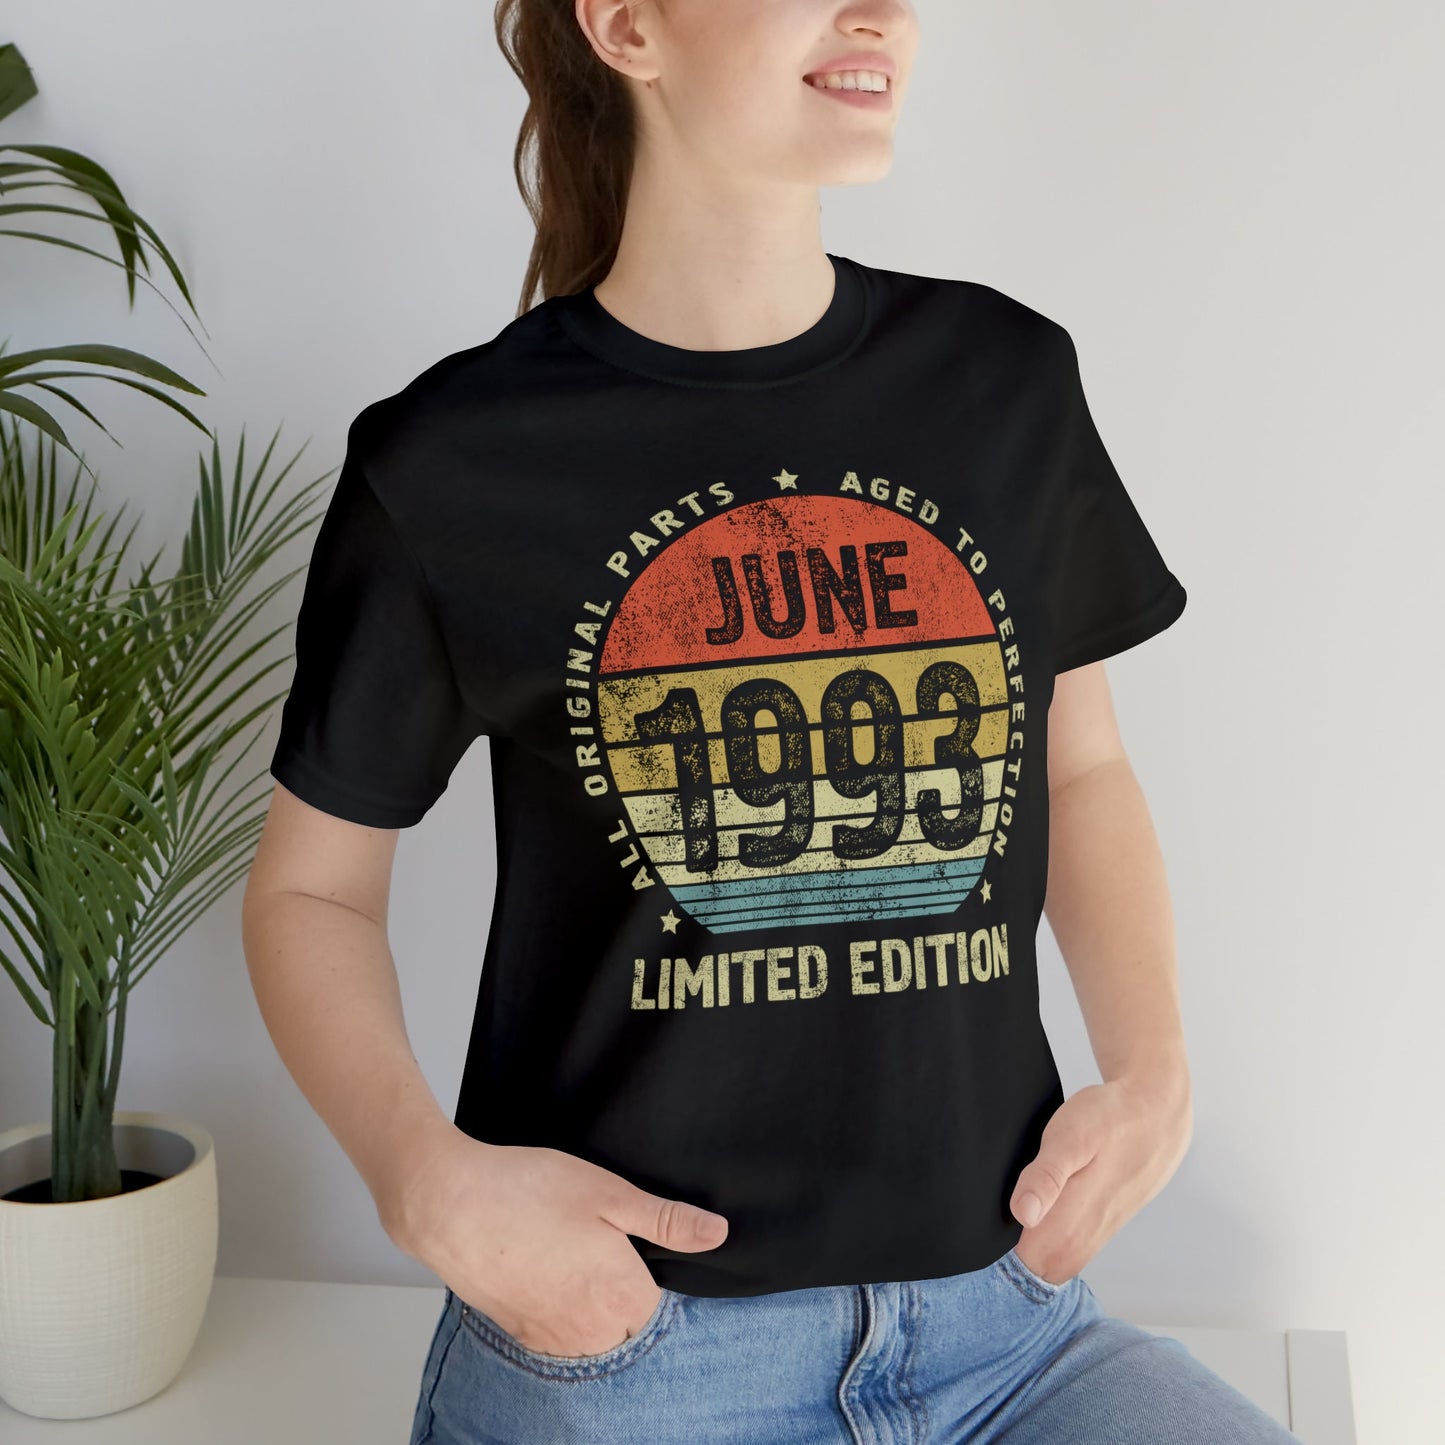 Vintage birthday gift t-shirt for women or men, June 1993 birthday shirt for wife or husband